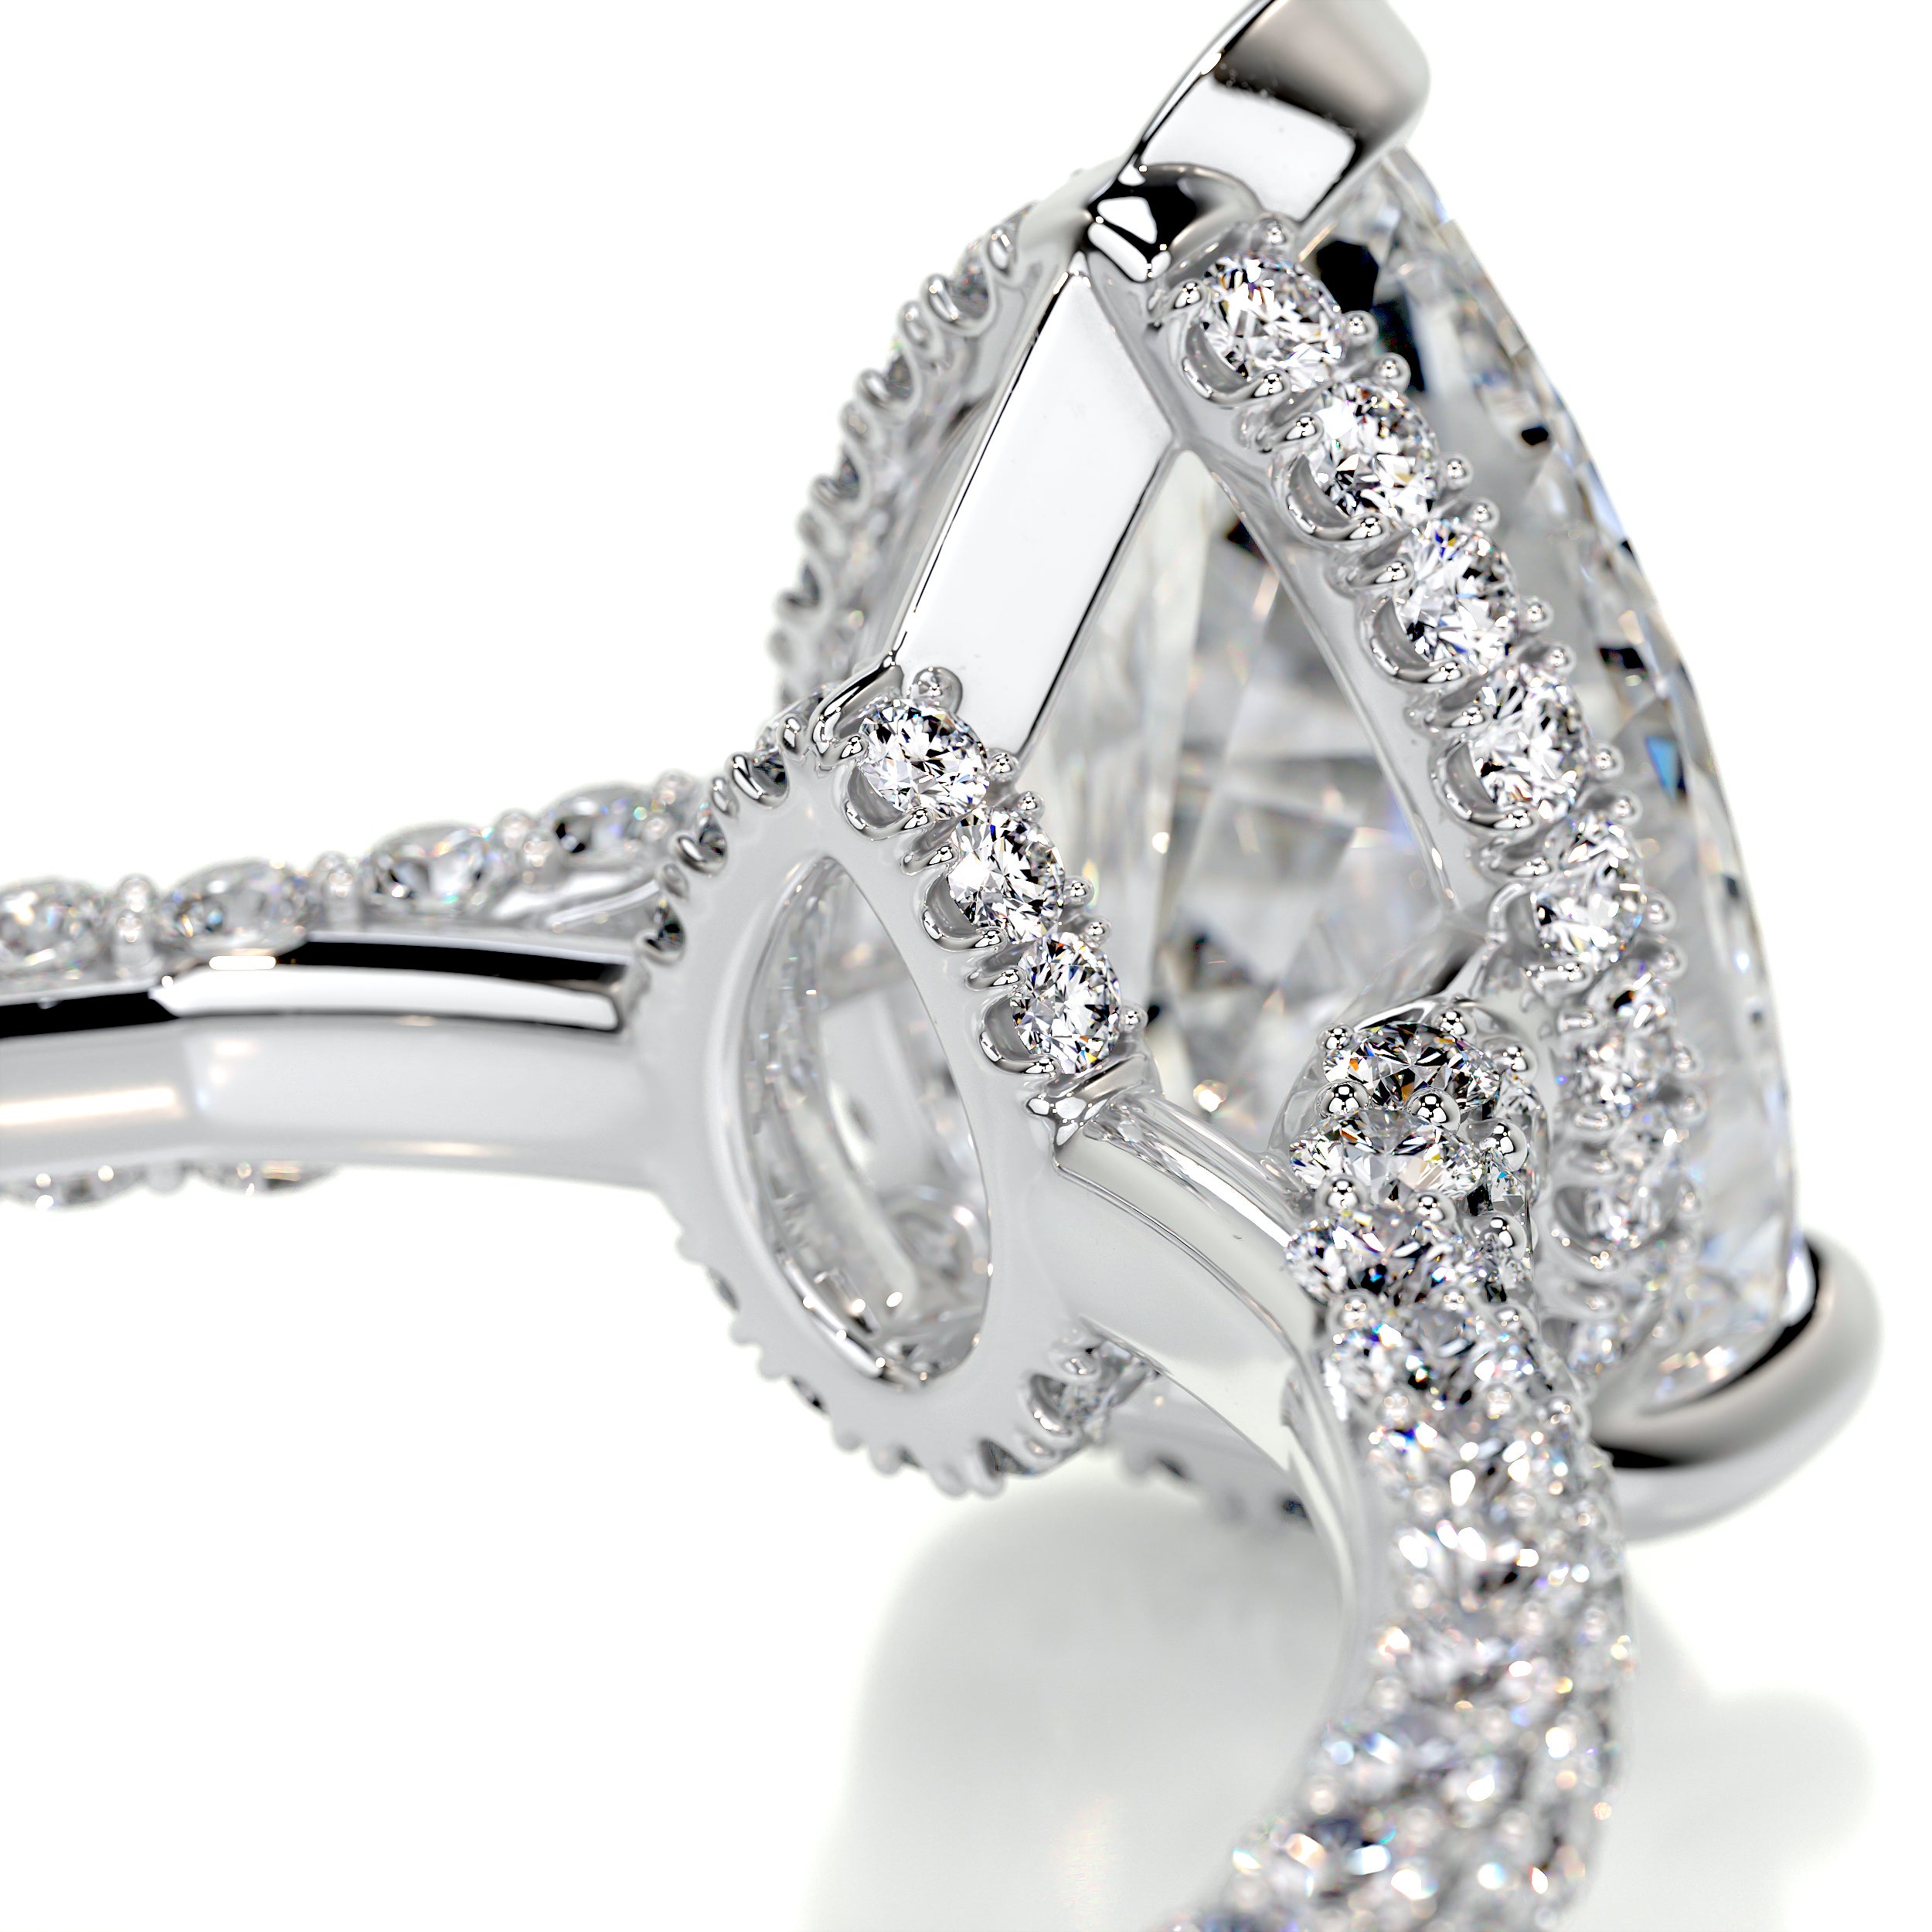 Nakia Diamond Engagement Ring   (2.00 Carat) -14K White Gold